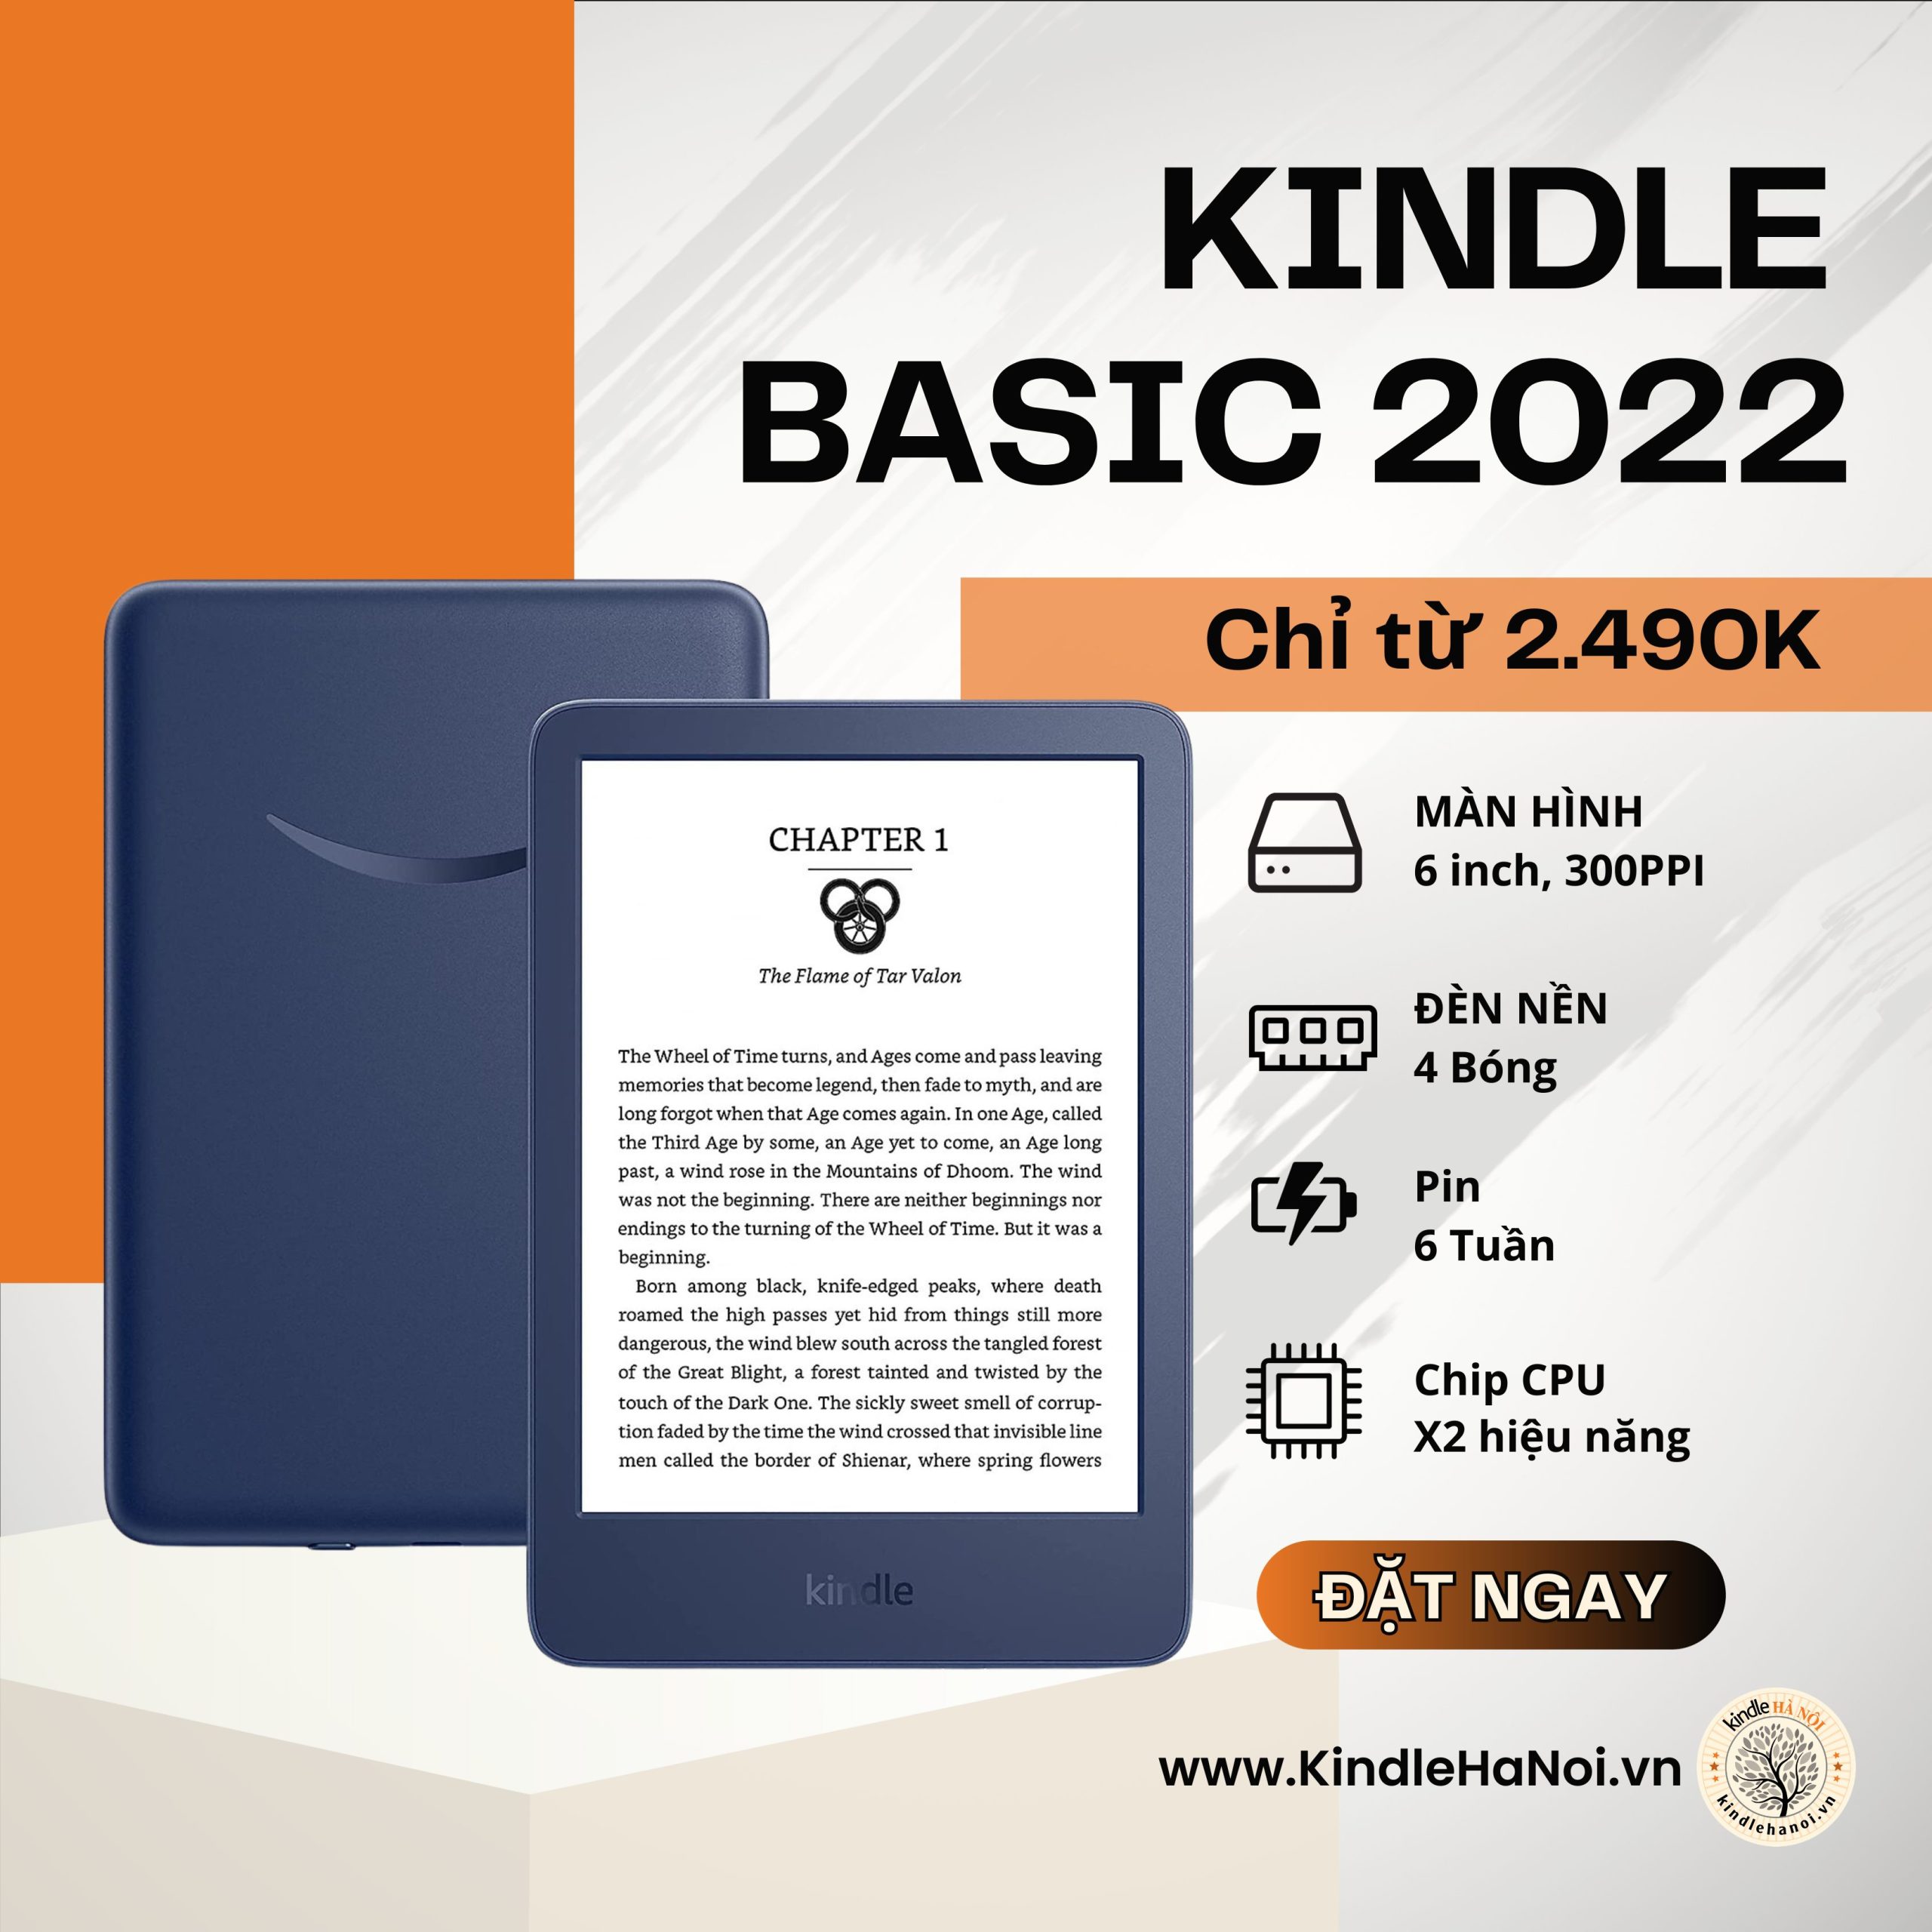 Mua máy đọc sách Kindle cho người mới - Kindle basic 2022